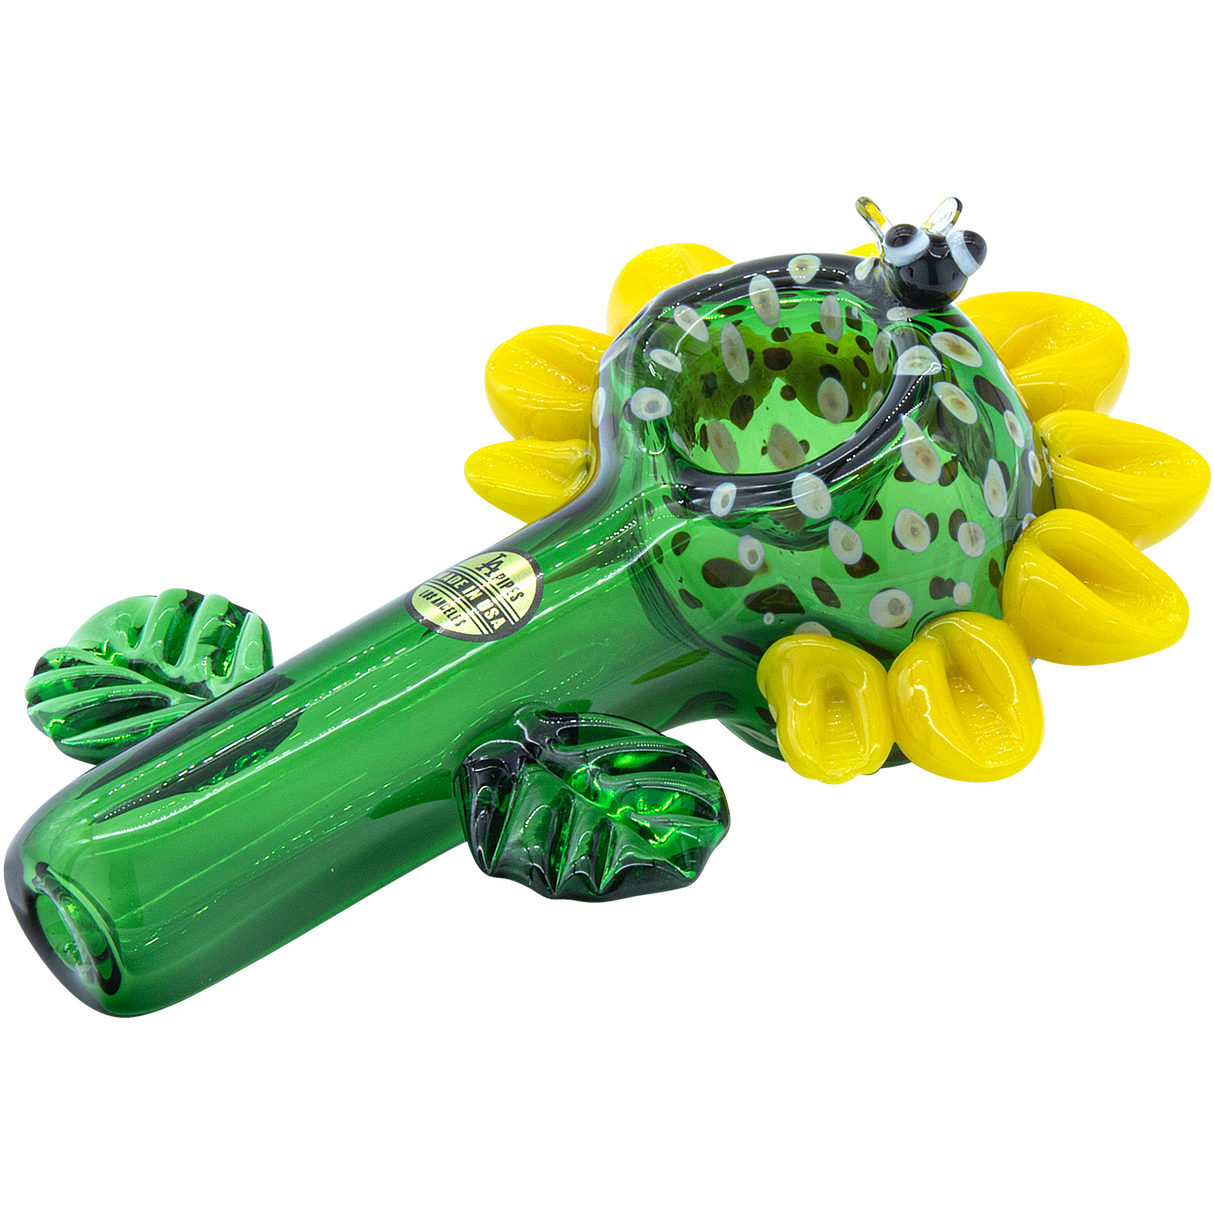 LA Pipes "Sunny Sunflowers" Glass Spoon Pipe, Compact 4.65" Length, Borosilicate